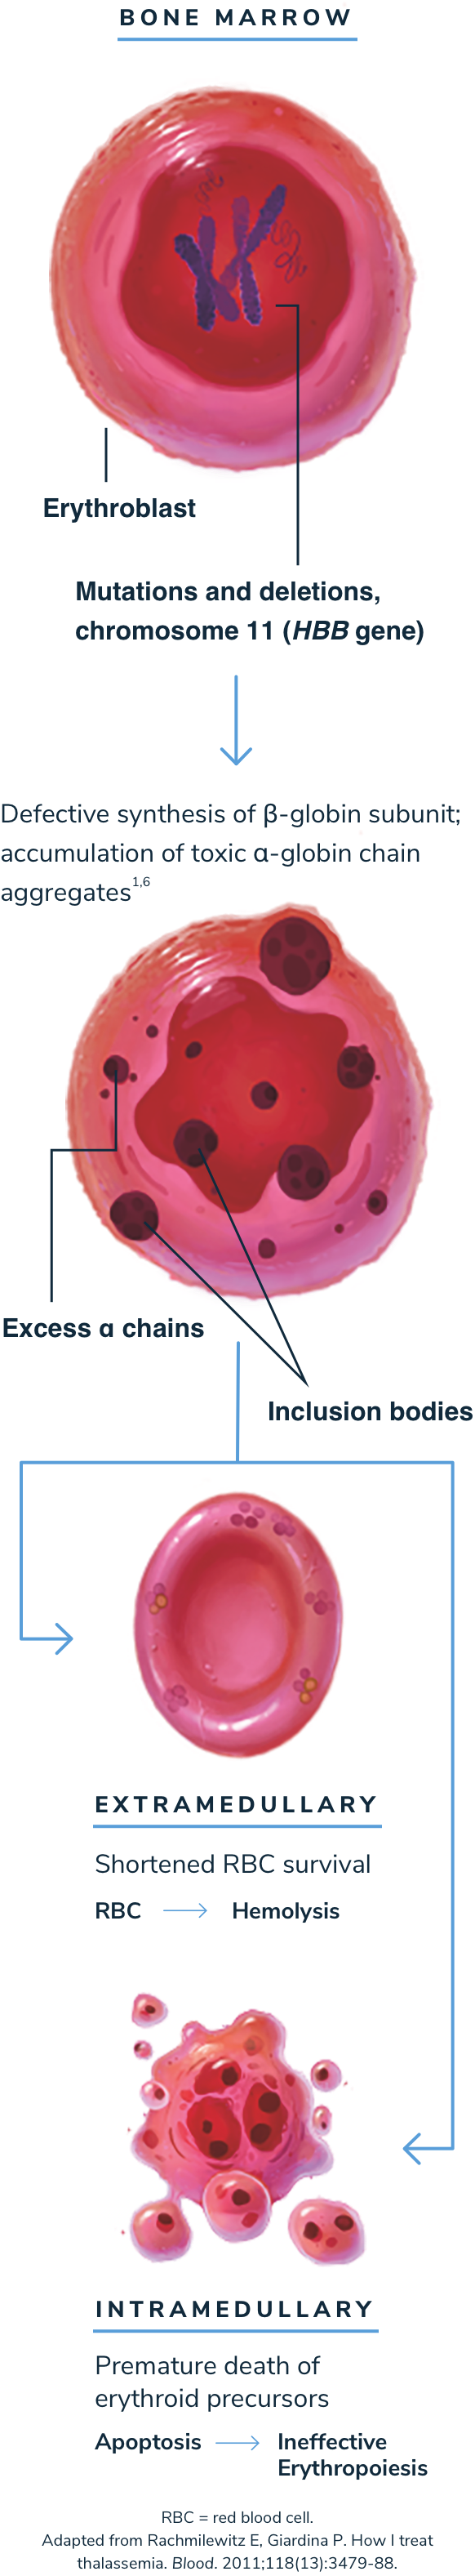 Illustration showing beta thalassemia pathophysiology via ineffective erythropoiesis and hemolysis